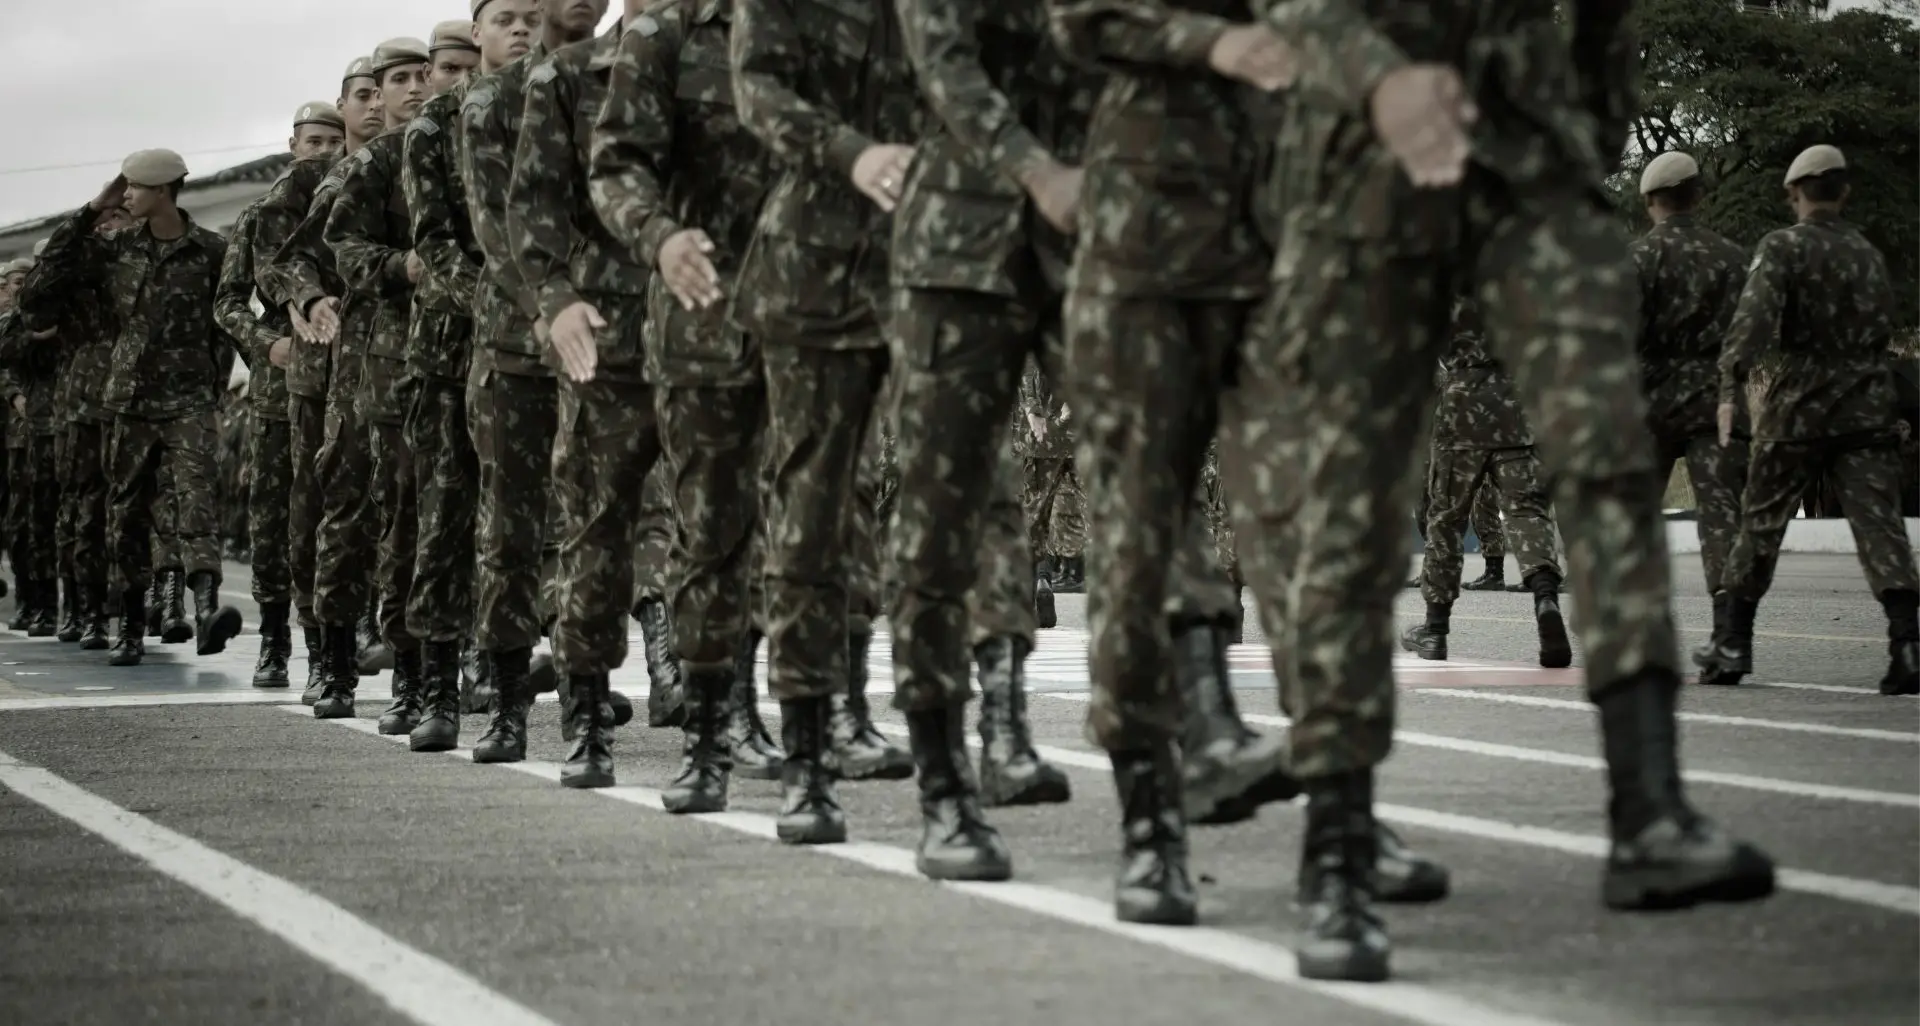 Militari: CGIL, ddl Corda su libertà sindacali sbagliato, bloccare iter parlamentare